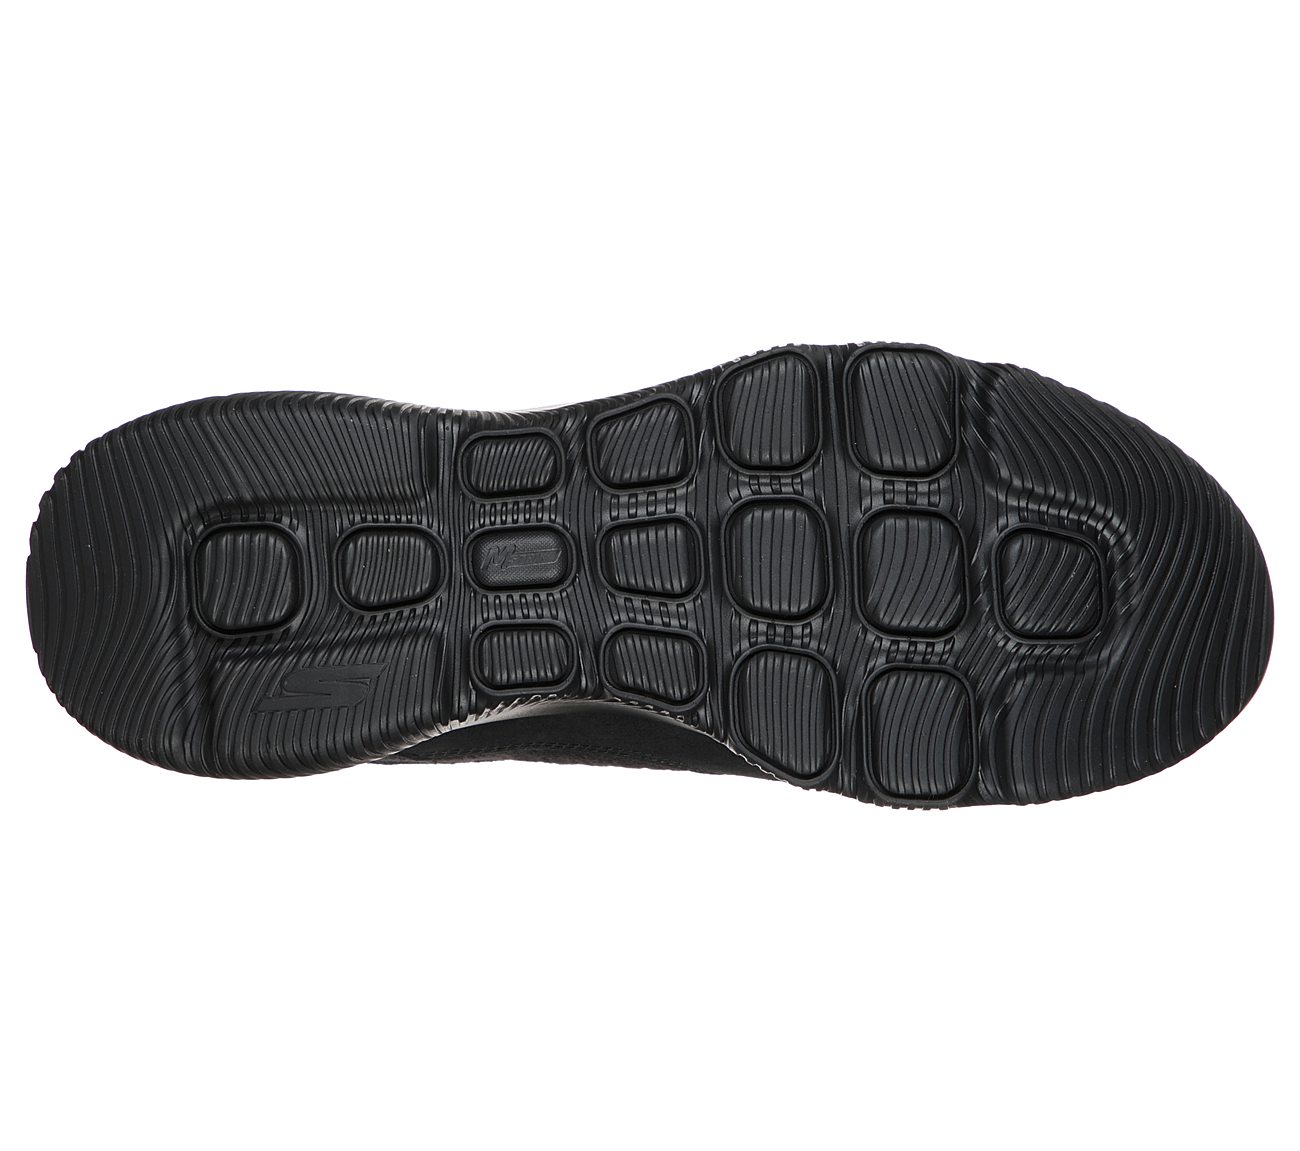 GO RUN FOCUS - SABLE, CHARCOAL/BLACK Footwear Top View